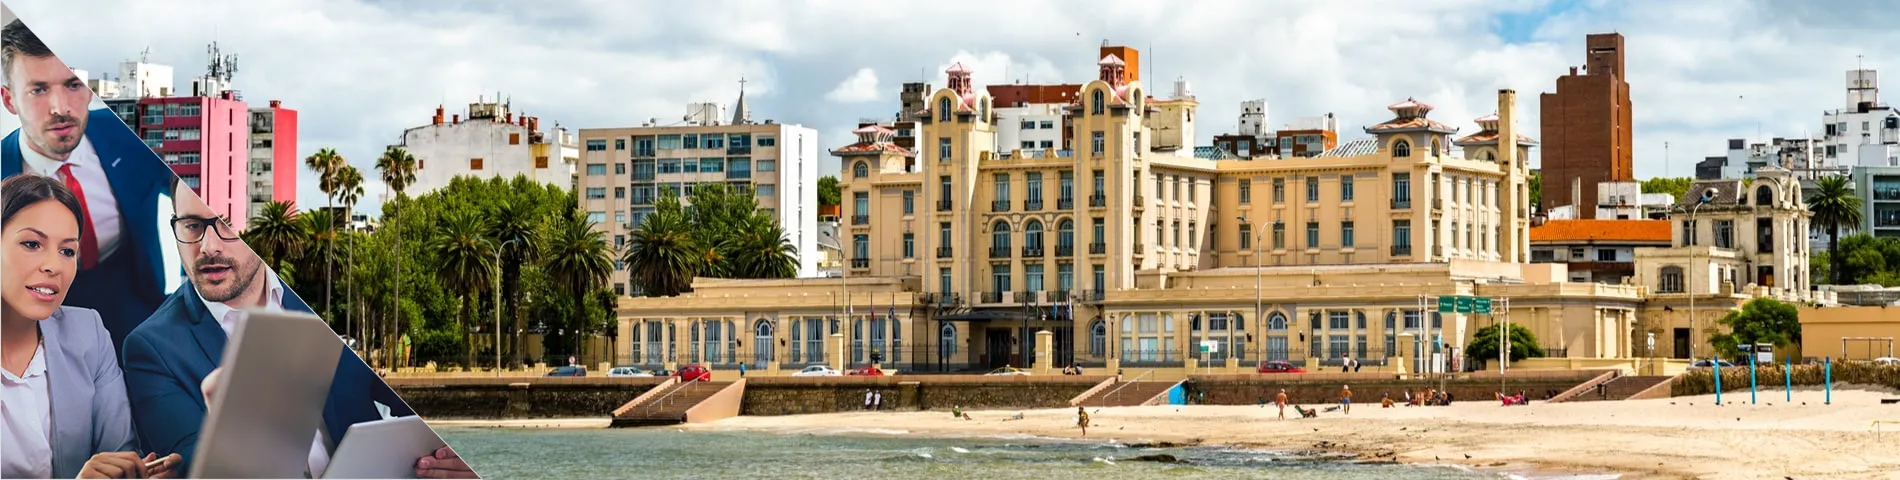 Montevideo - Yhdistetty perus & business